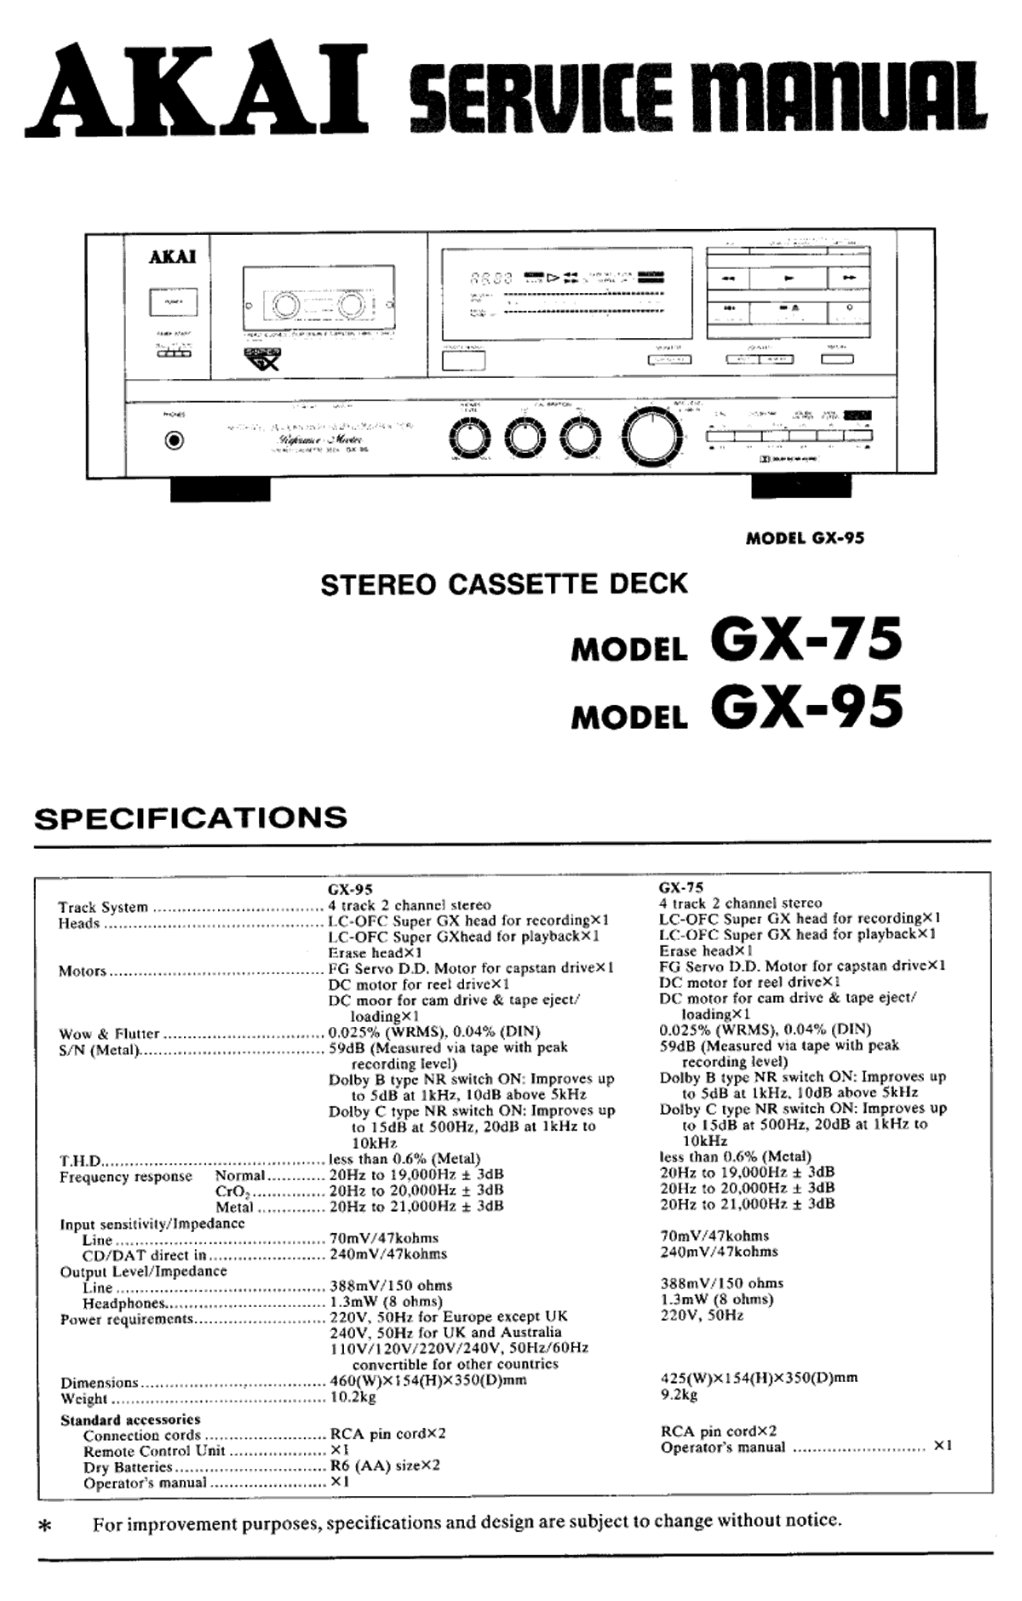 Akai GX-75, GX-95 Service Manual